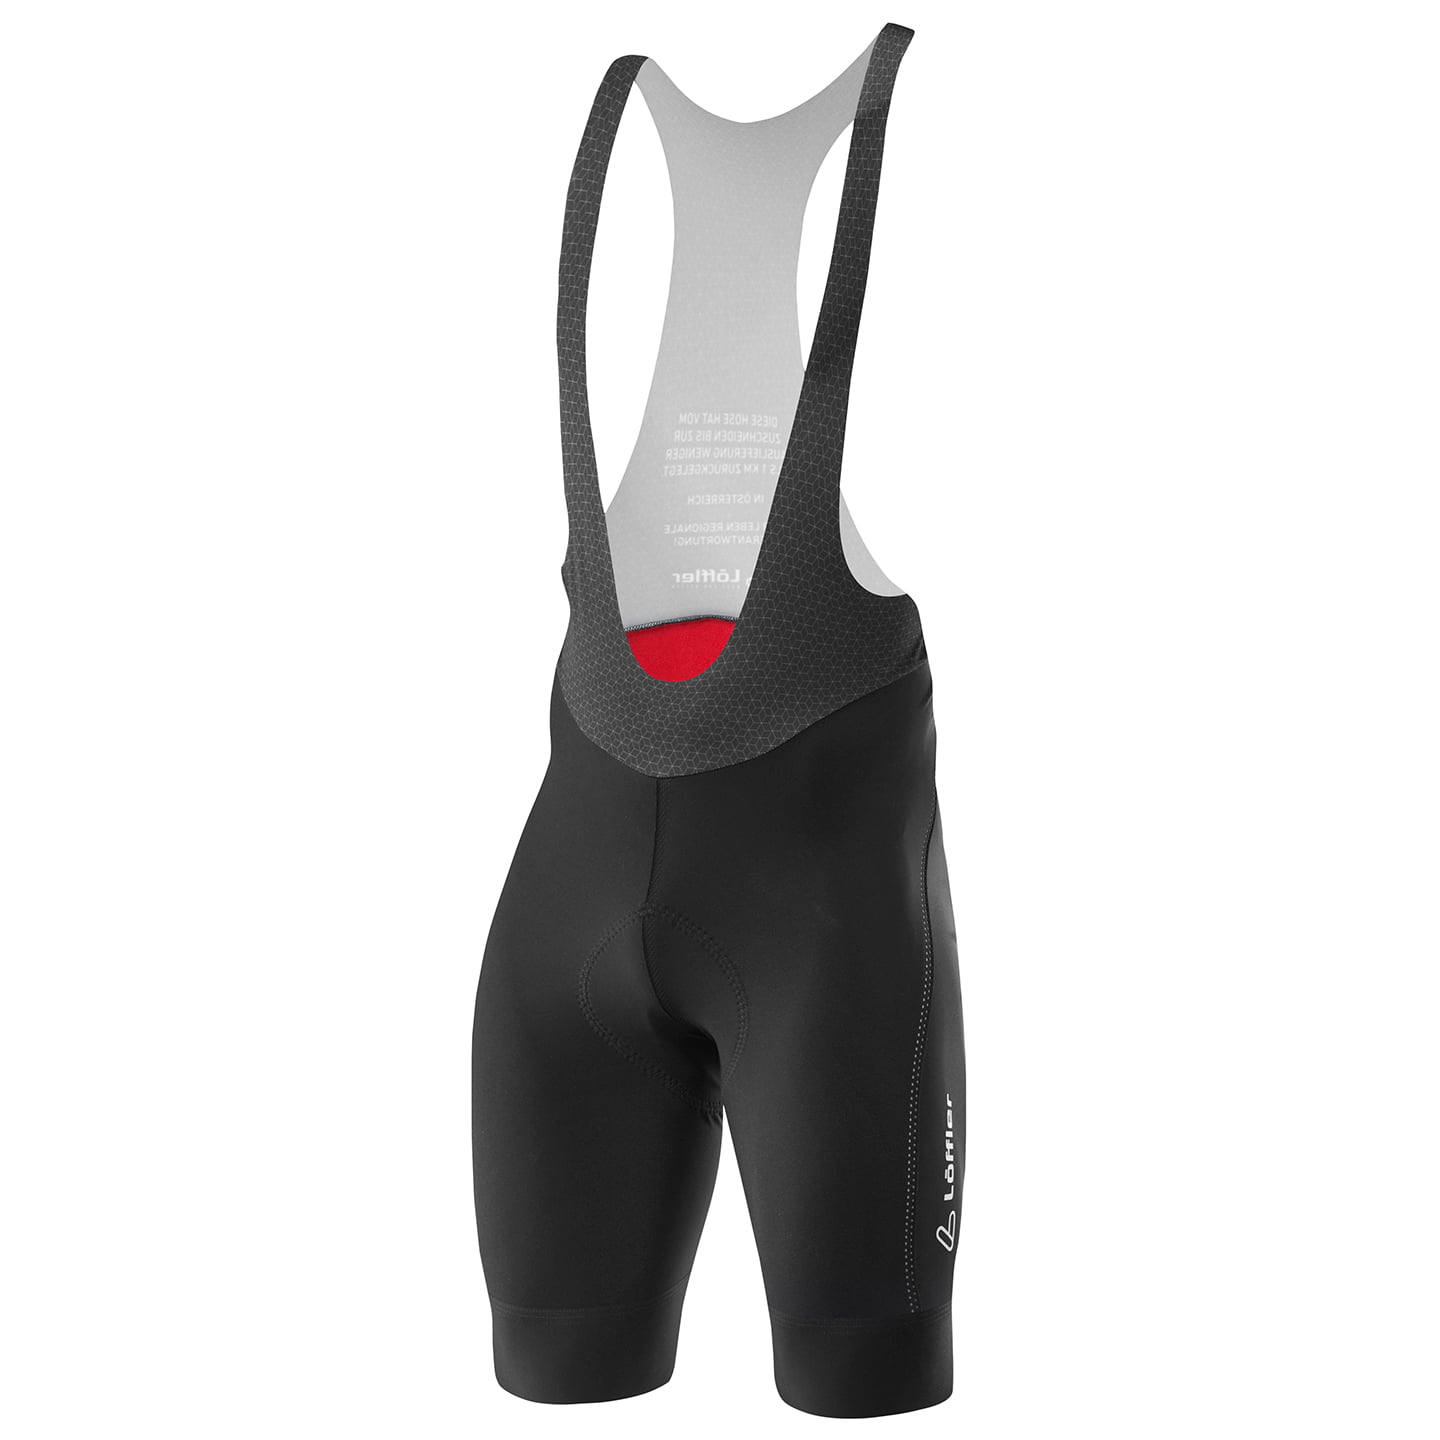 LOFFLER hotBOND RF XT Bib Shorts Bib Shorts, for men, size XL, Cycle shorts, Cycling clothing